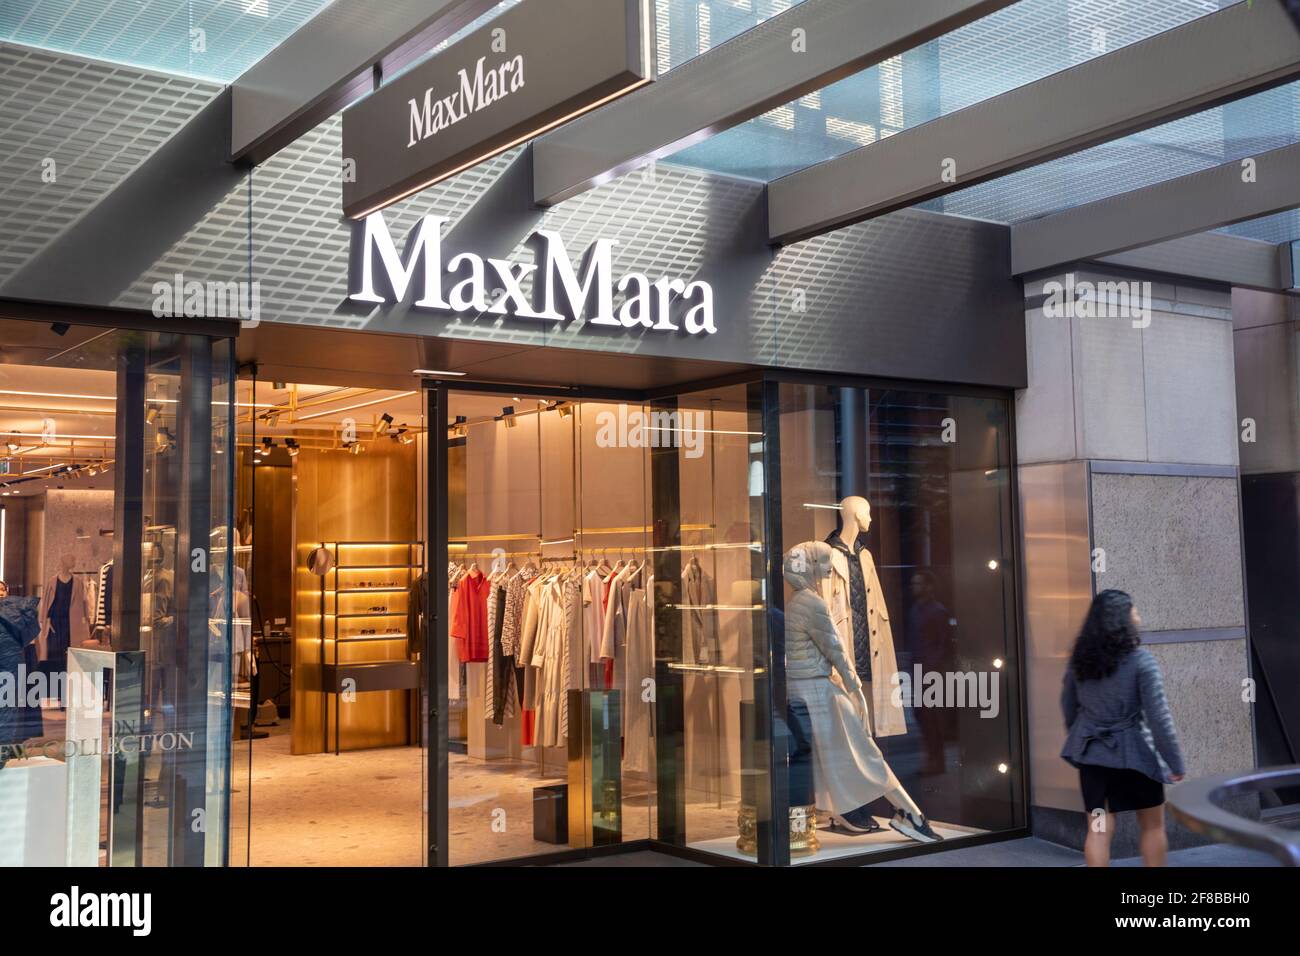 Maxmara clothes store in George street,Sydney city centre,NSW,Australia  Stock Photo - Alamy